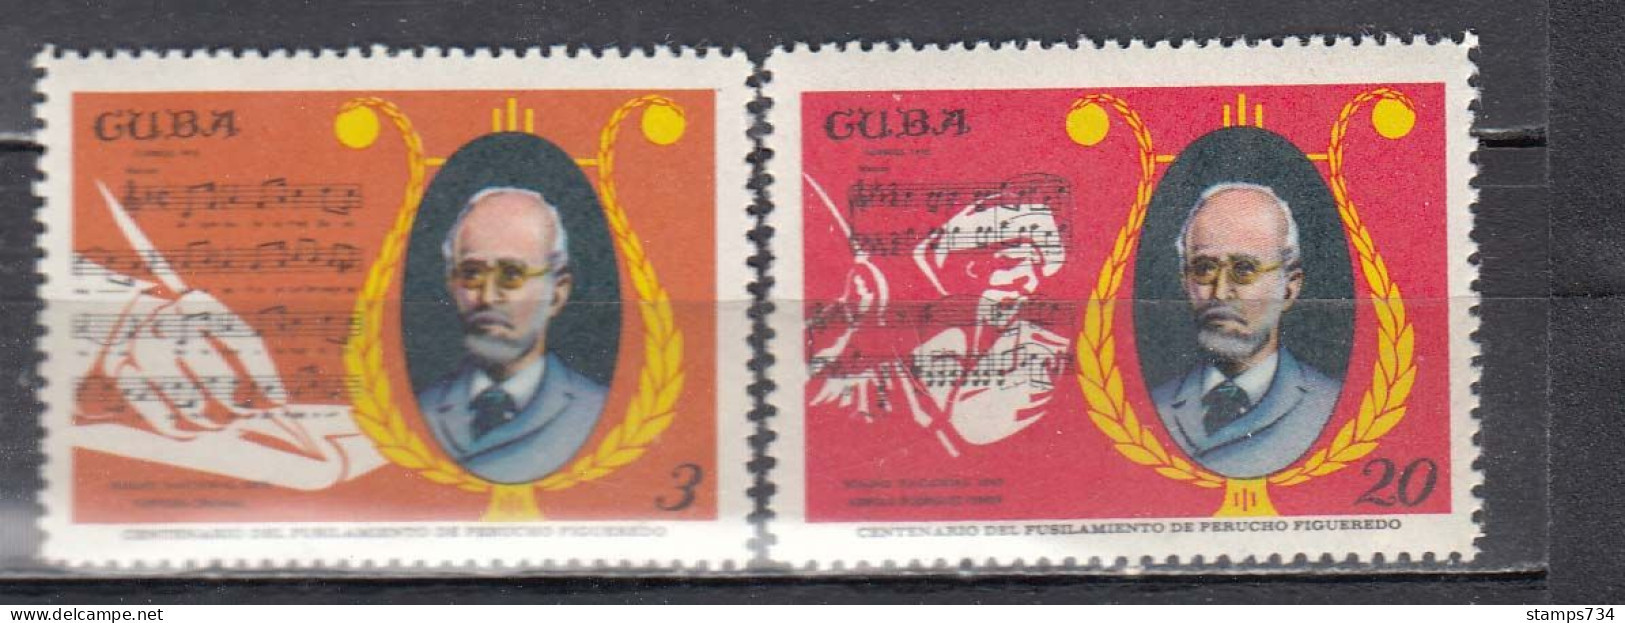 Cuba 1970 - 100th Anniversary Of The Death Of Perucho Figueredo, Mi-Nr. 1616/17, MNH** - Ungebraucht